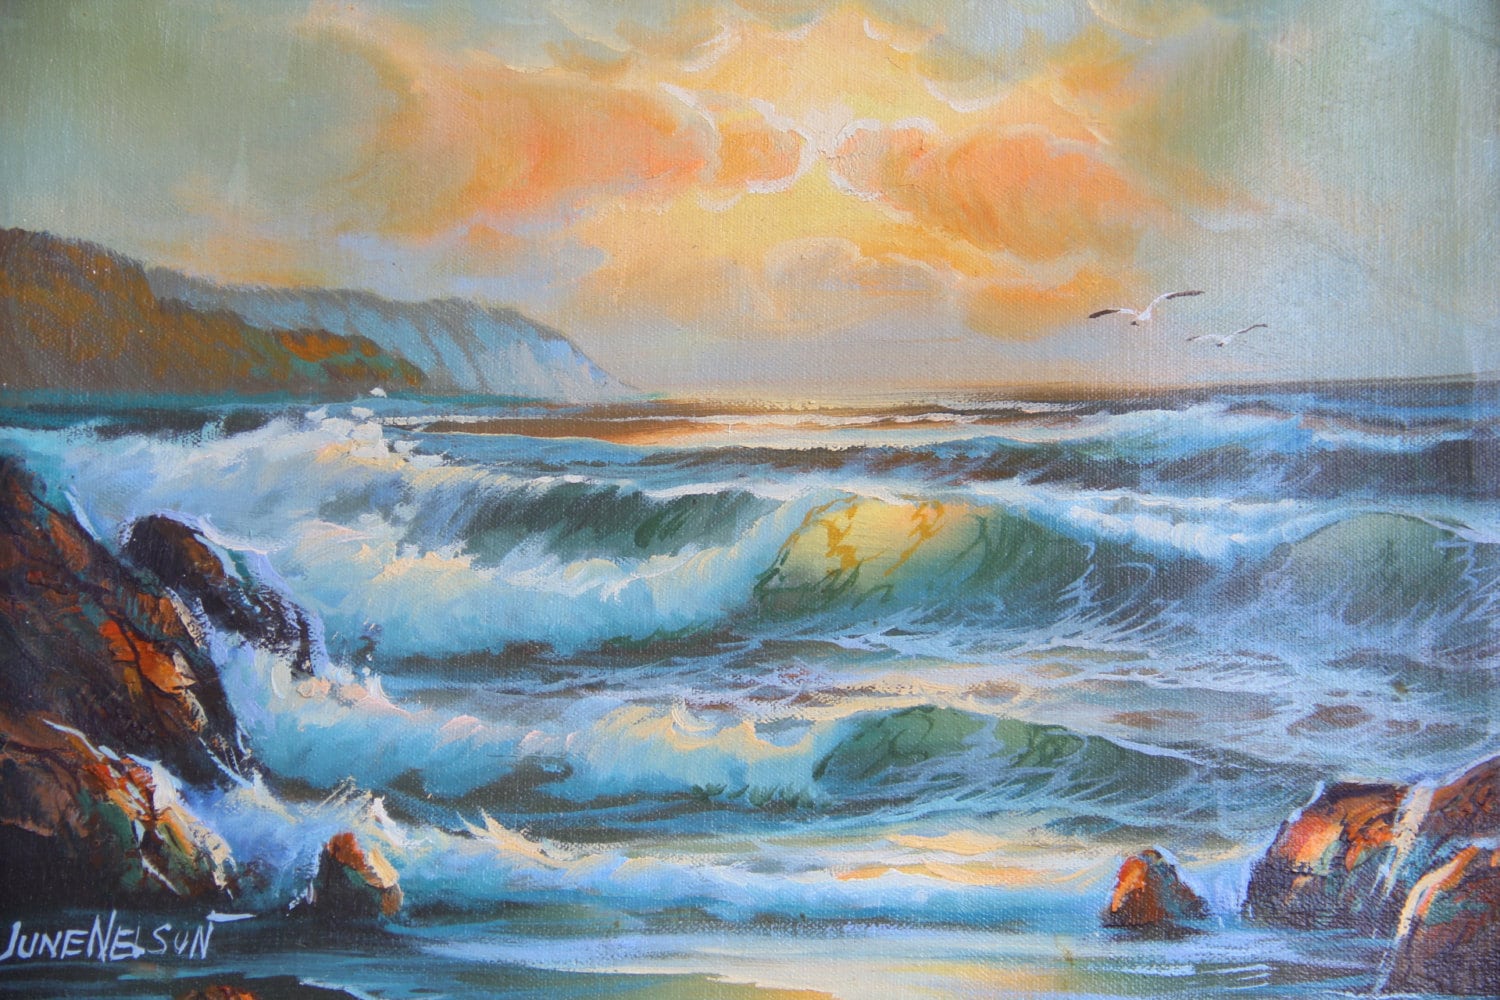 SALE Vintage Seascape ocean painting 12x16 Signed June